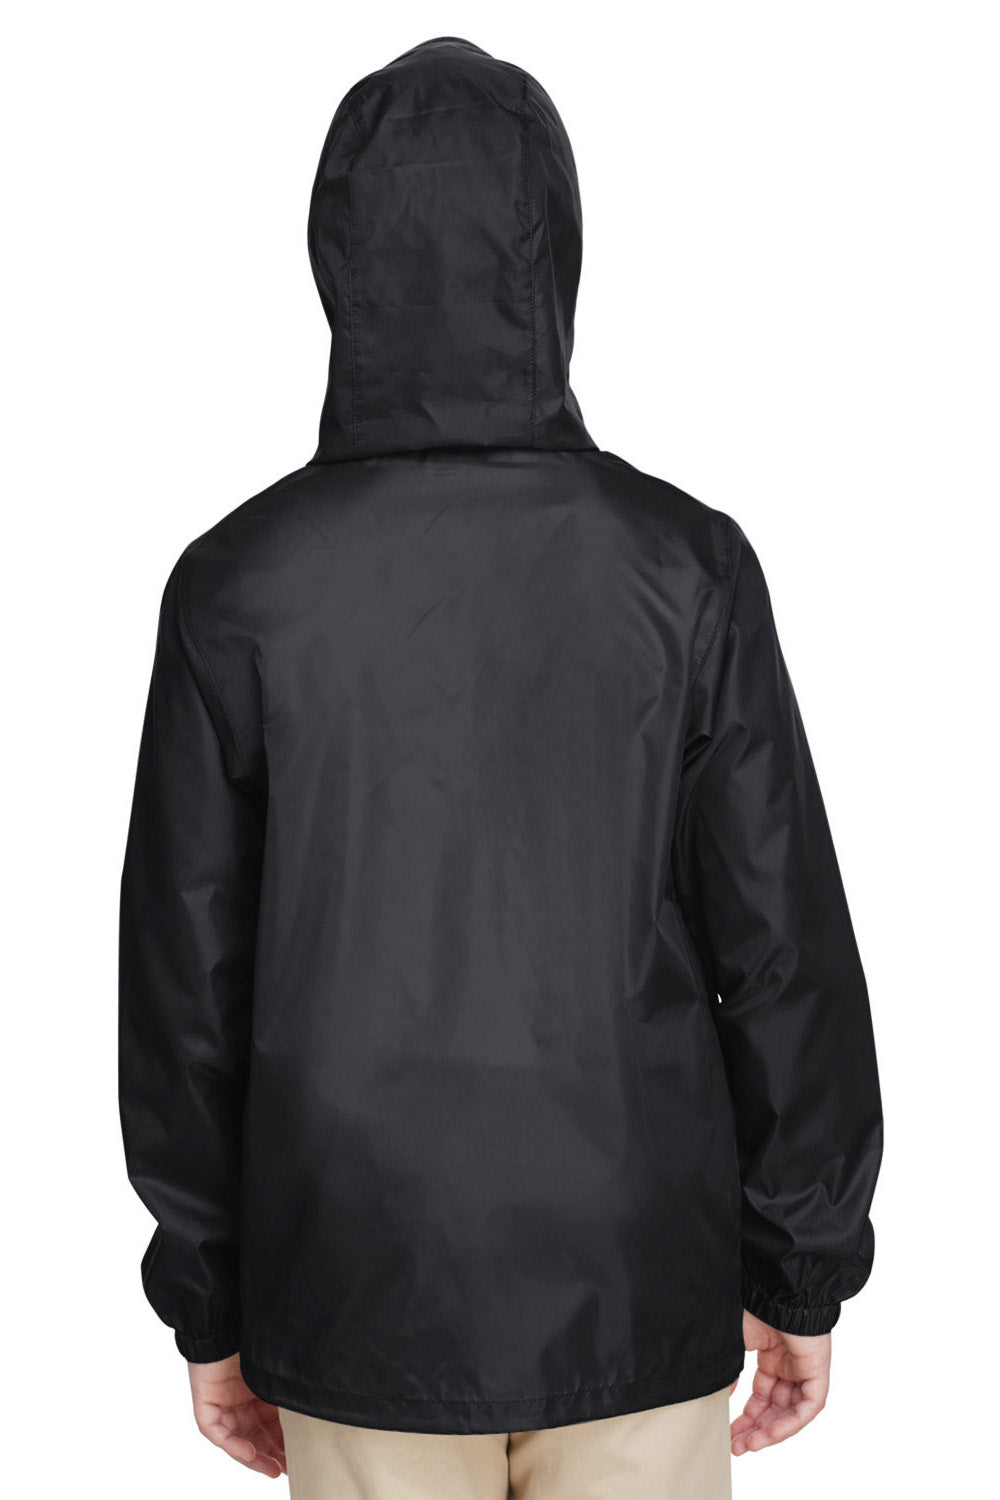 Team 365 TT73Y Youth Zone Protect Water Resistant Full Zip Hooded Jacket Black Back